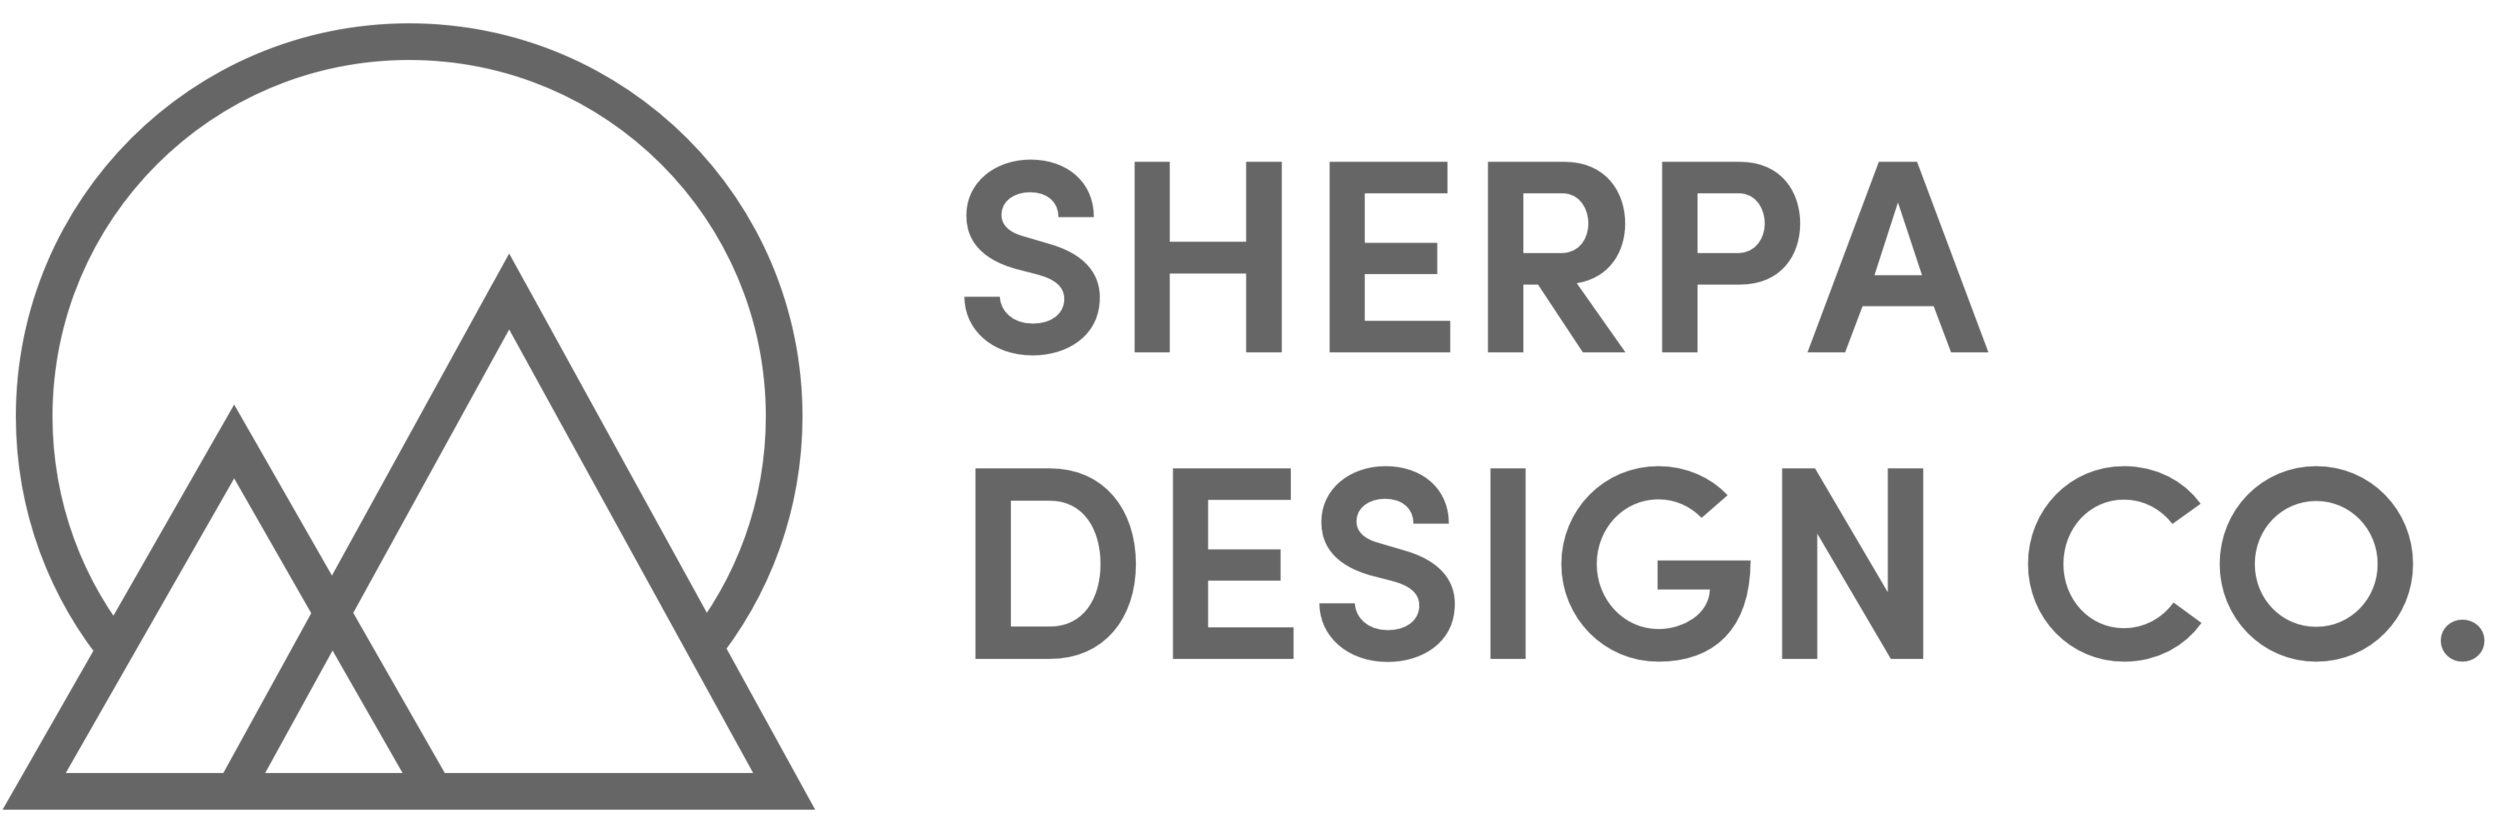 Sherpa Design Co. Logo.png